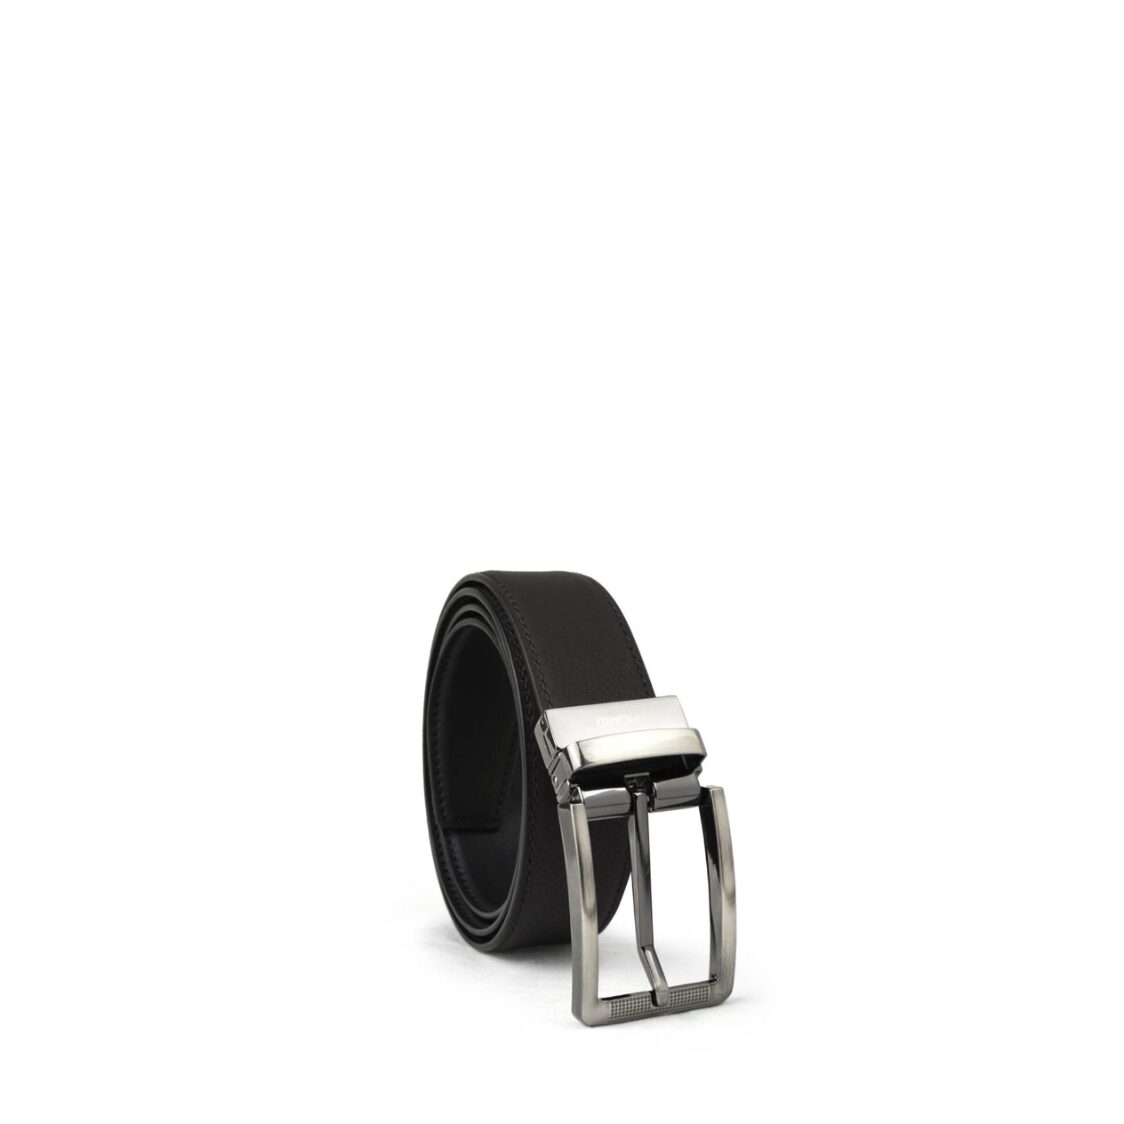 Picard Hanover Auto Lock Leather Belt 35mm120cm Black